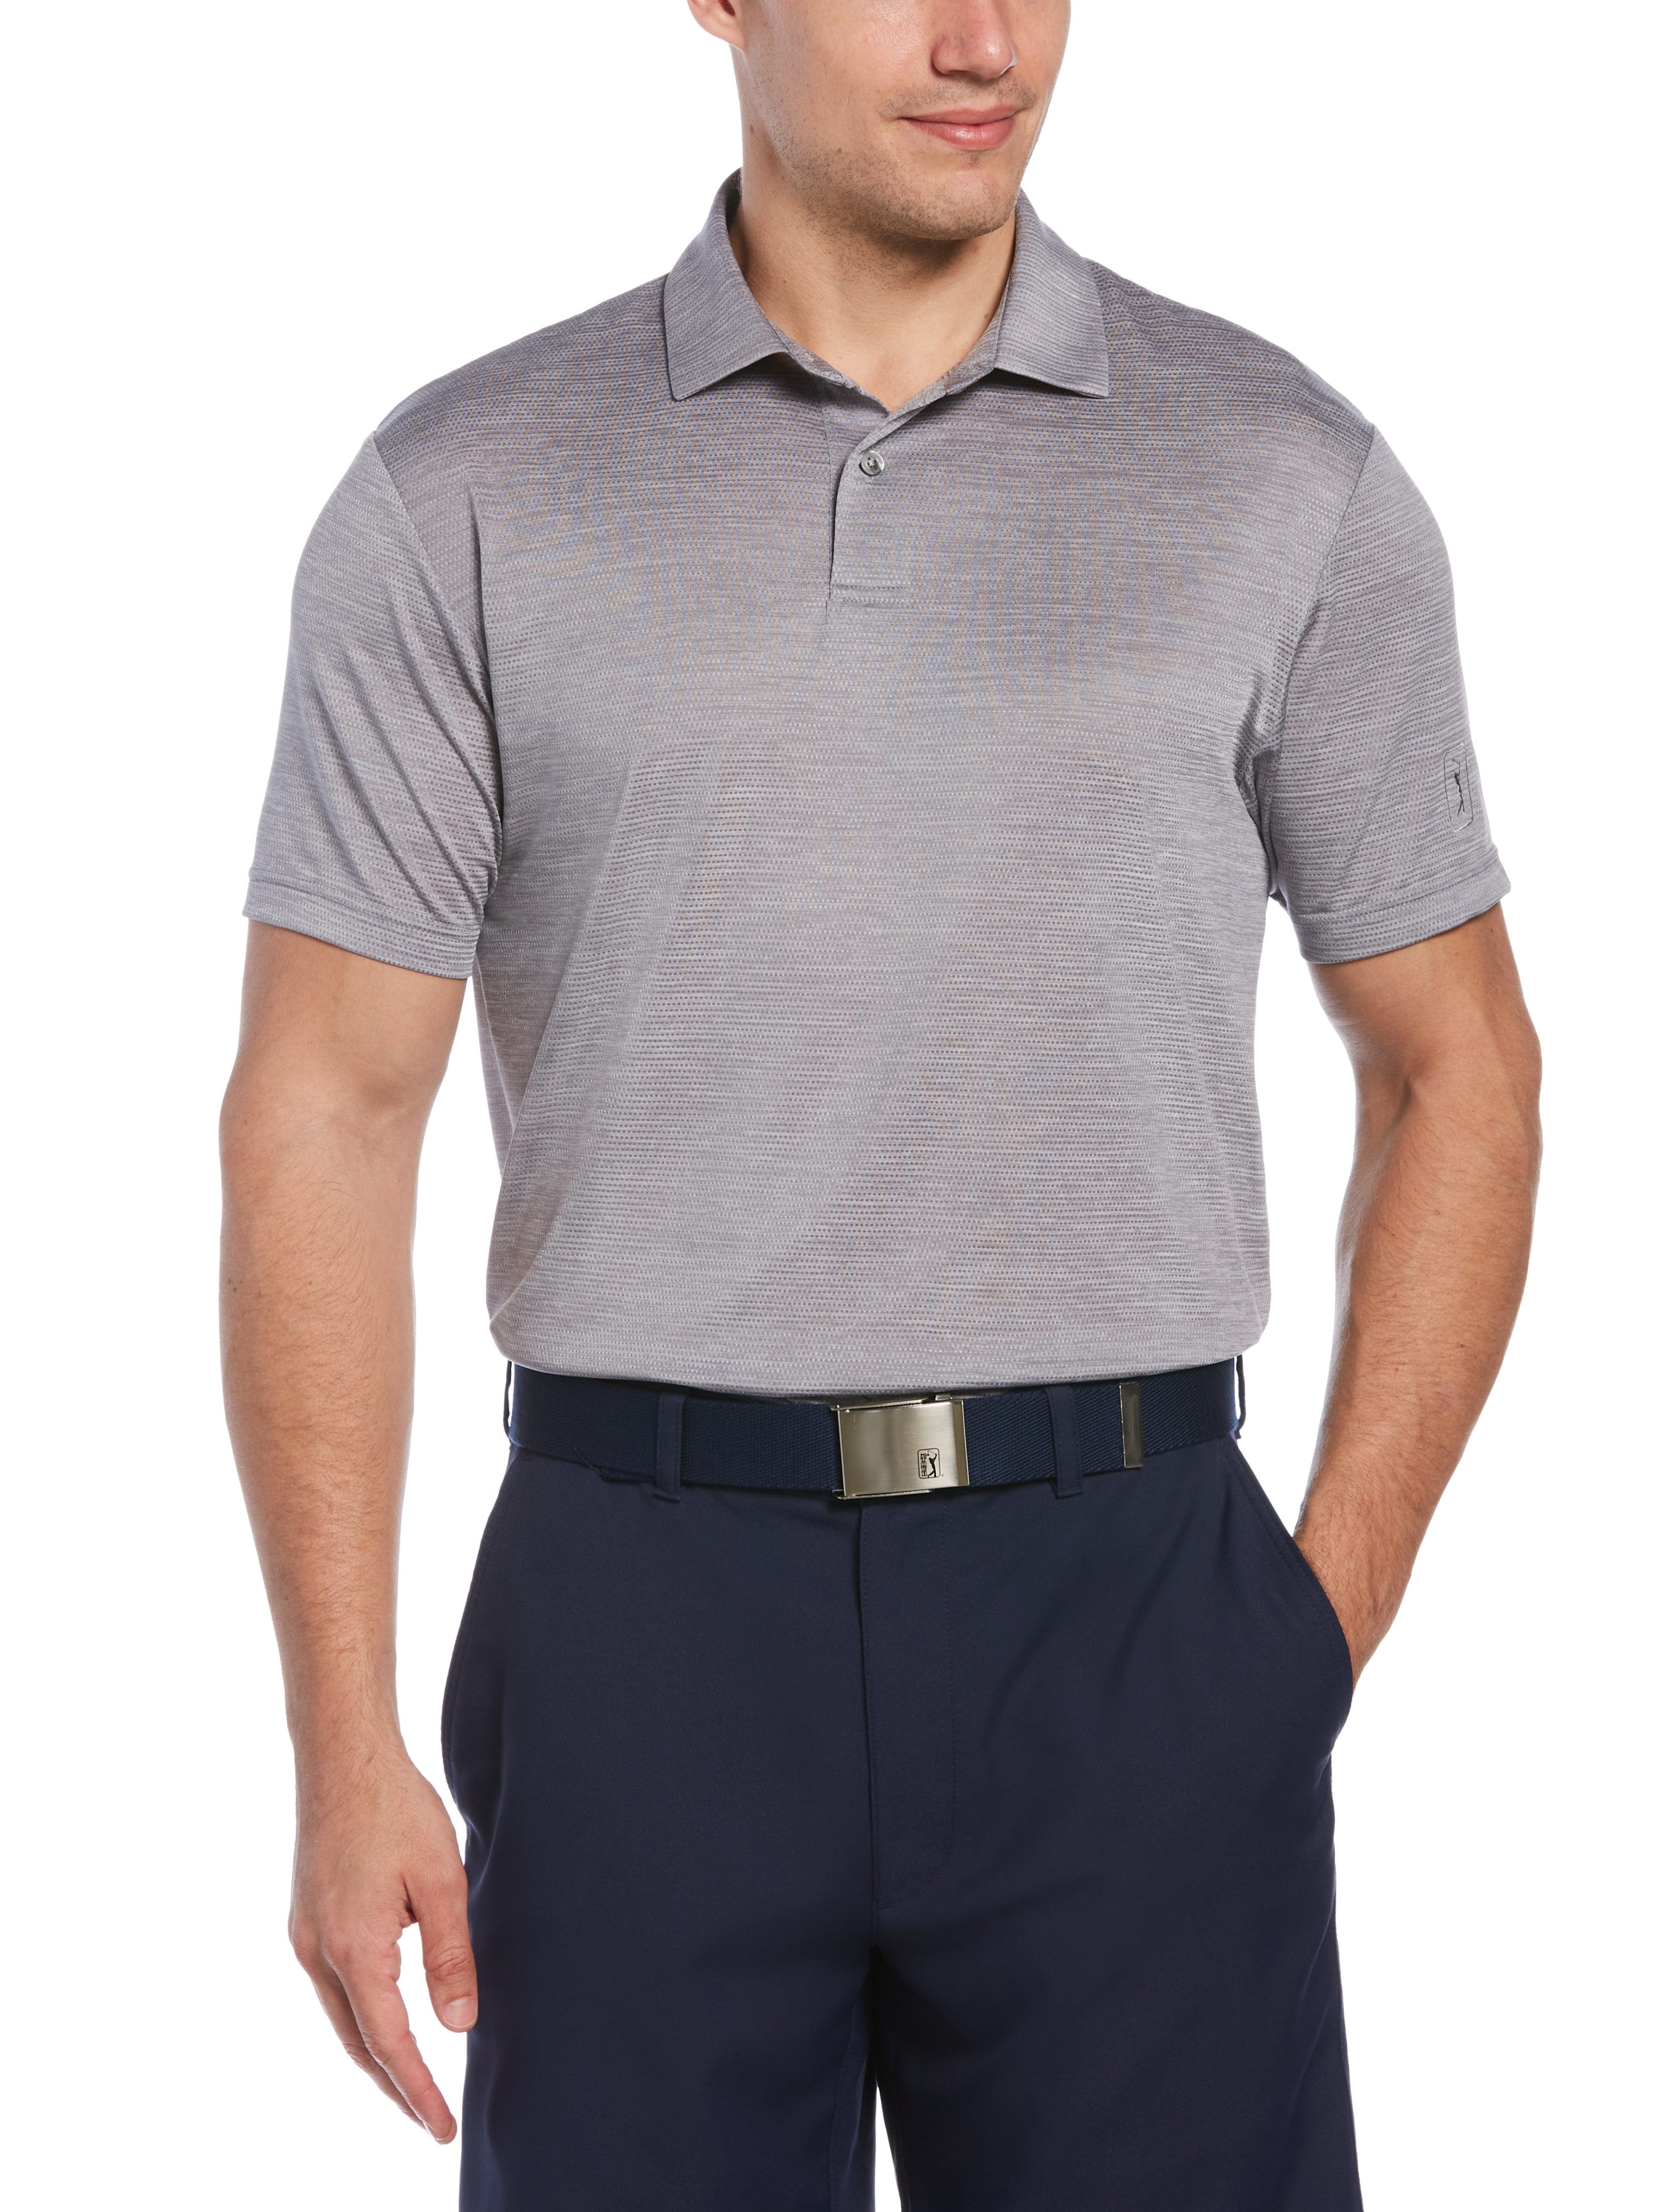 PGA TOUR Apparel Mens Space Dye Texture Golf Polo Shirt, Size Large, Tradewinds Heather Gray, 100% Polyester | Golf Apparel Shop